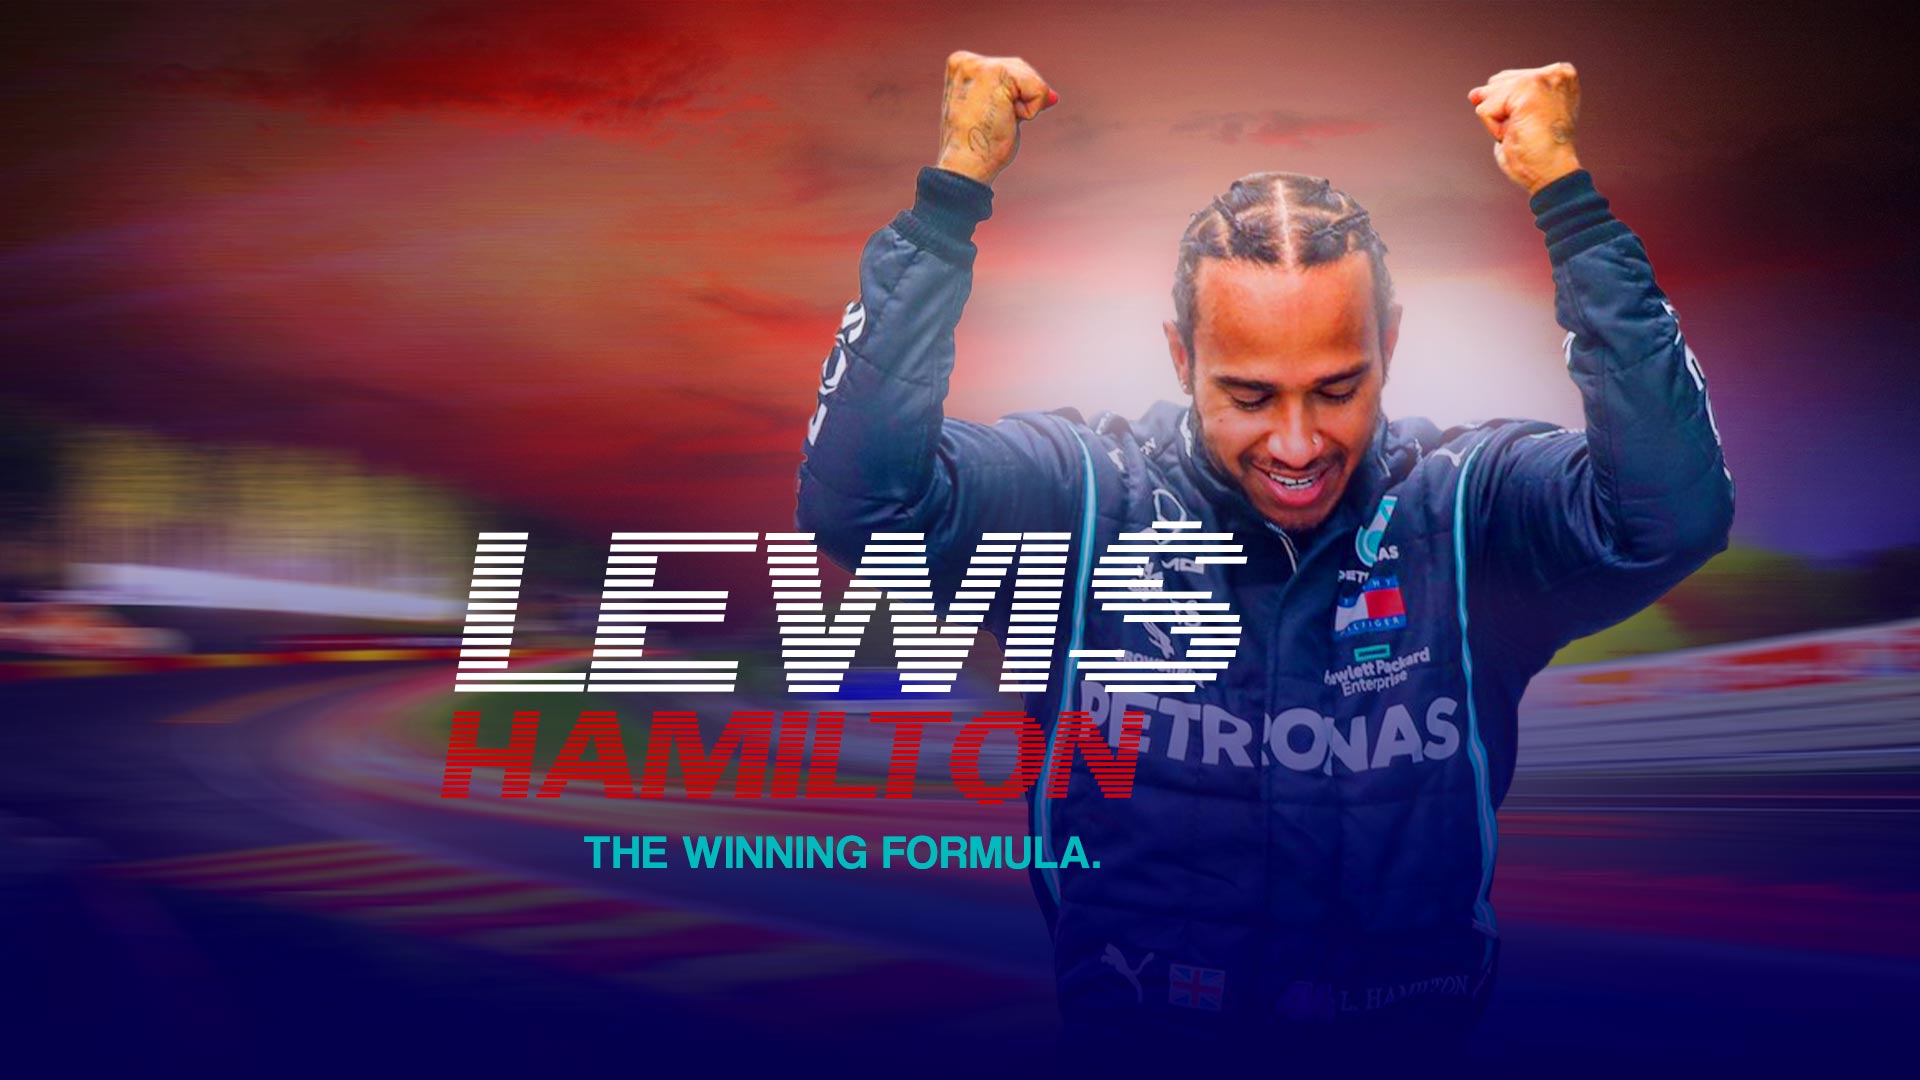 Lewis Hamilton The Winning Formula.jpg